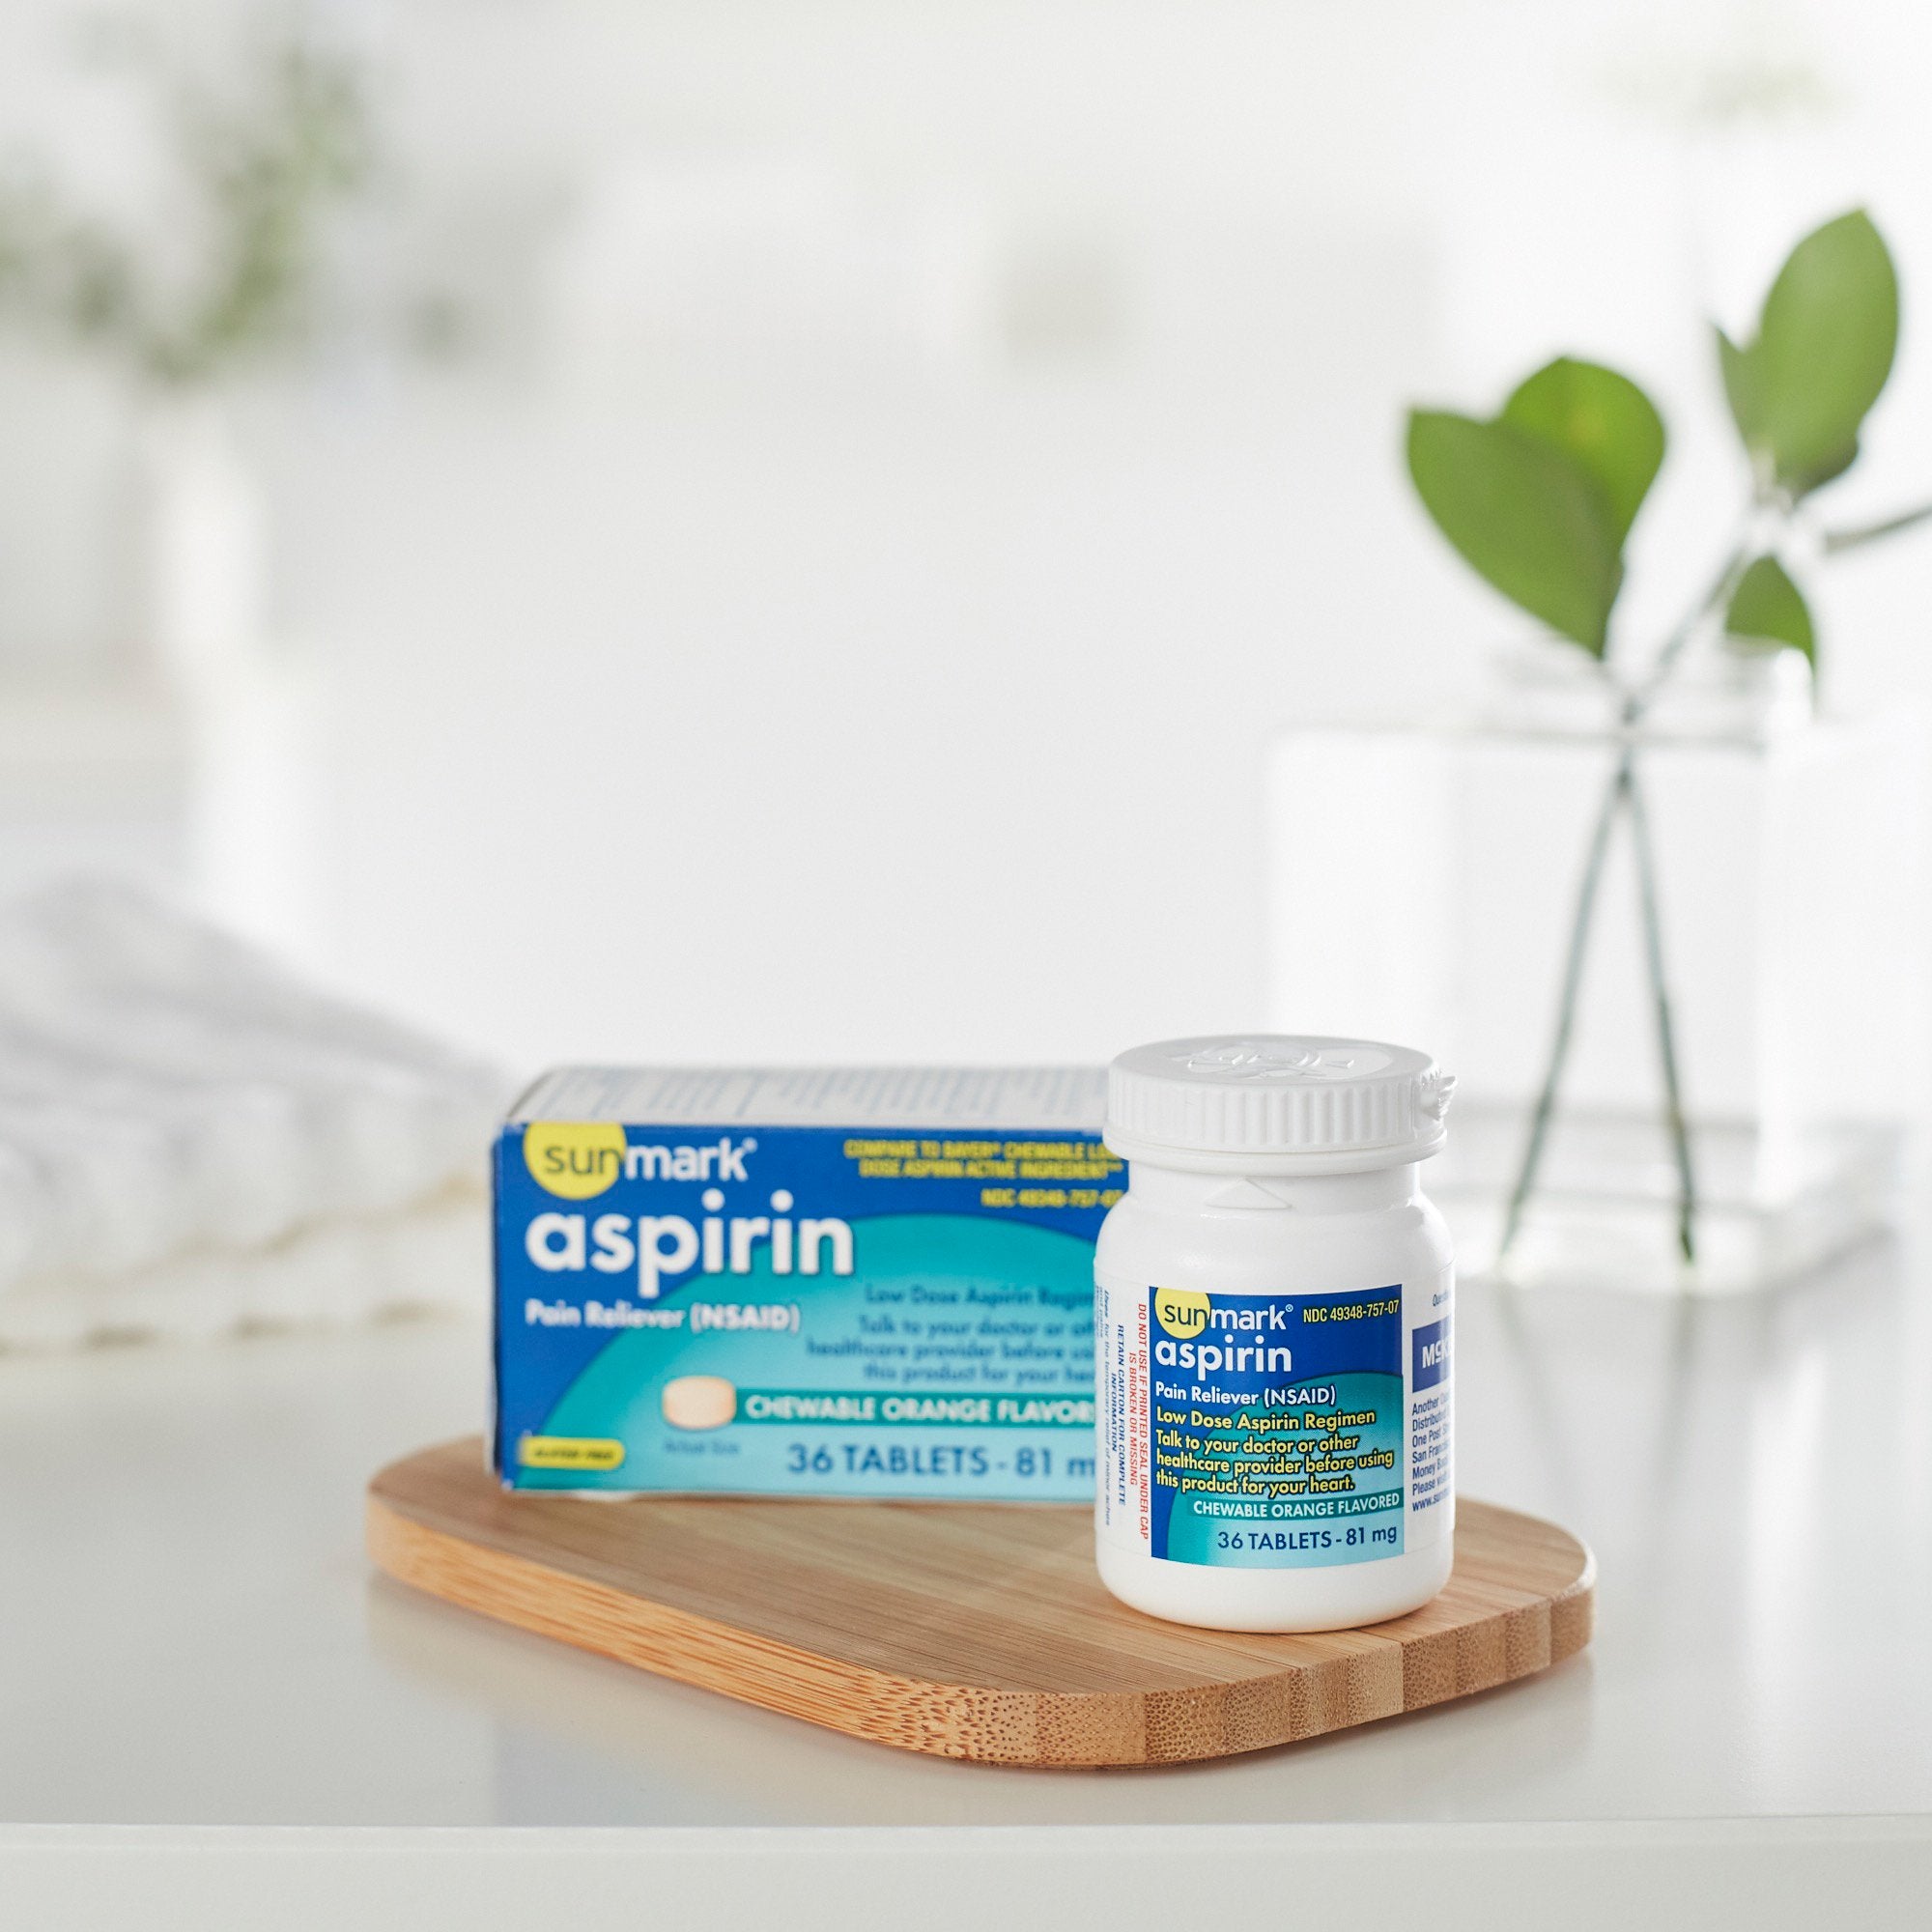 Pain Relief sunmark 81 mg Strength Aspirin Chewable Tablet 36 per Box